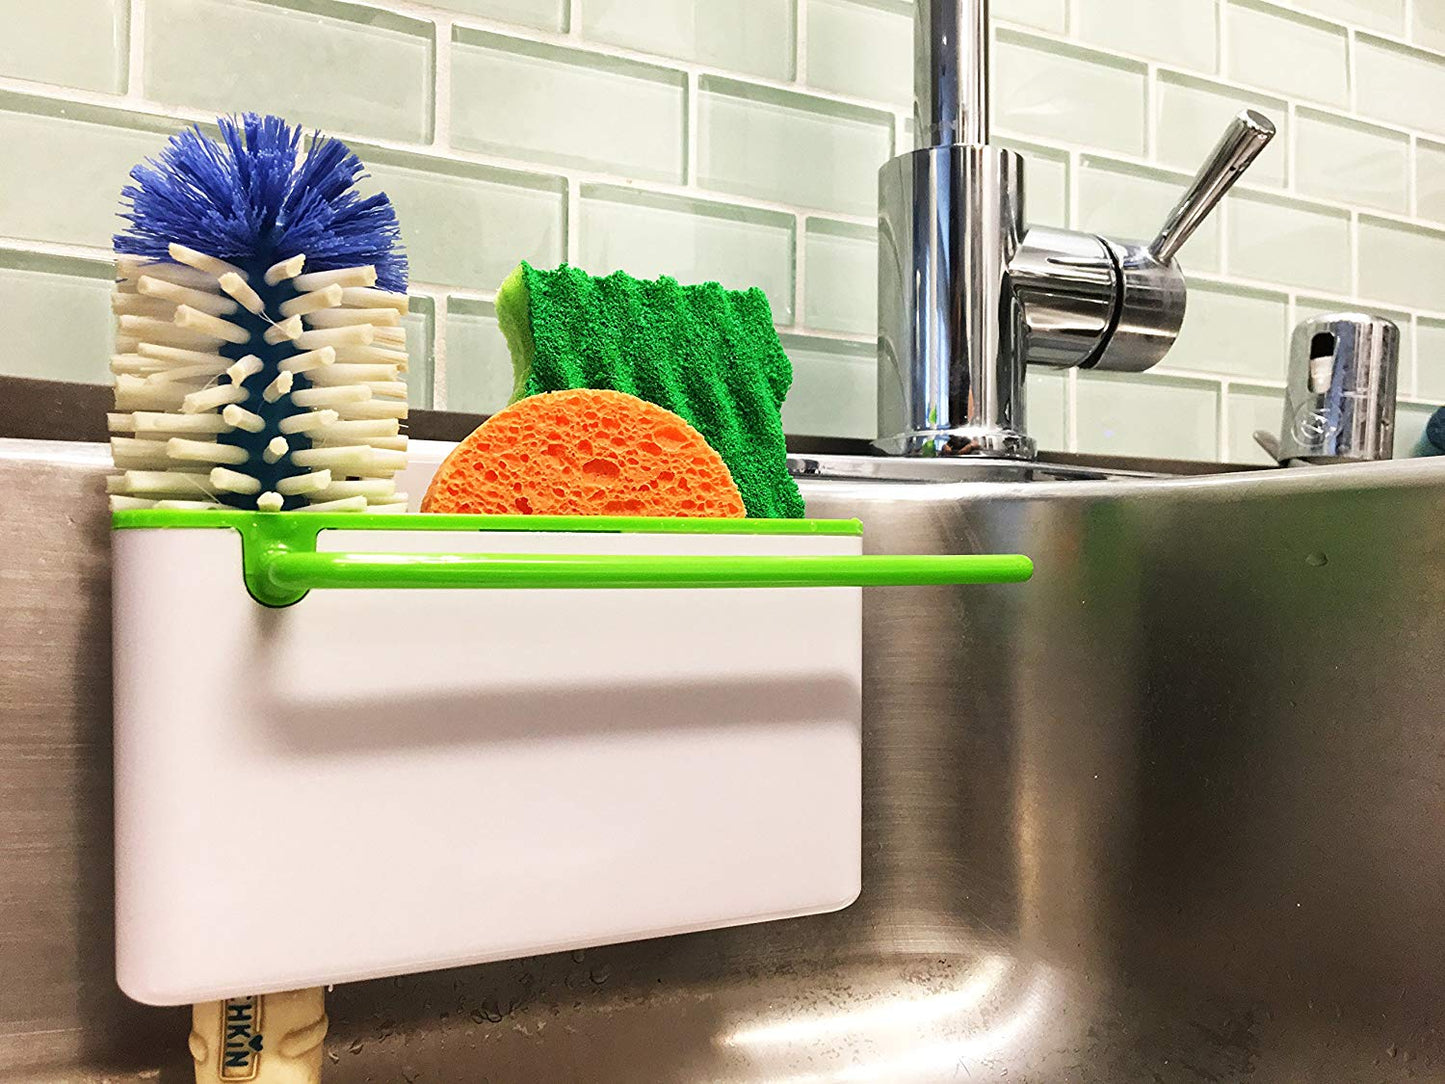 Star Element Sink Caddy Kitchen Soap,Sponge Holder and Brush Holder. Multifunction Sink Organizer for Countertop